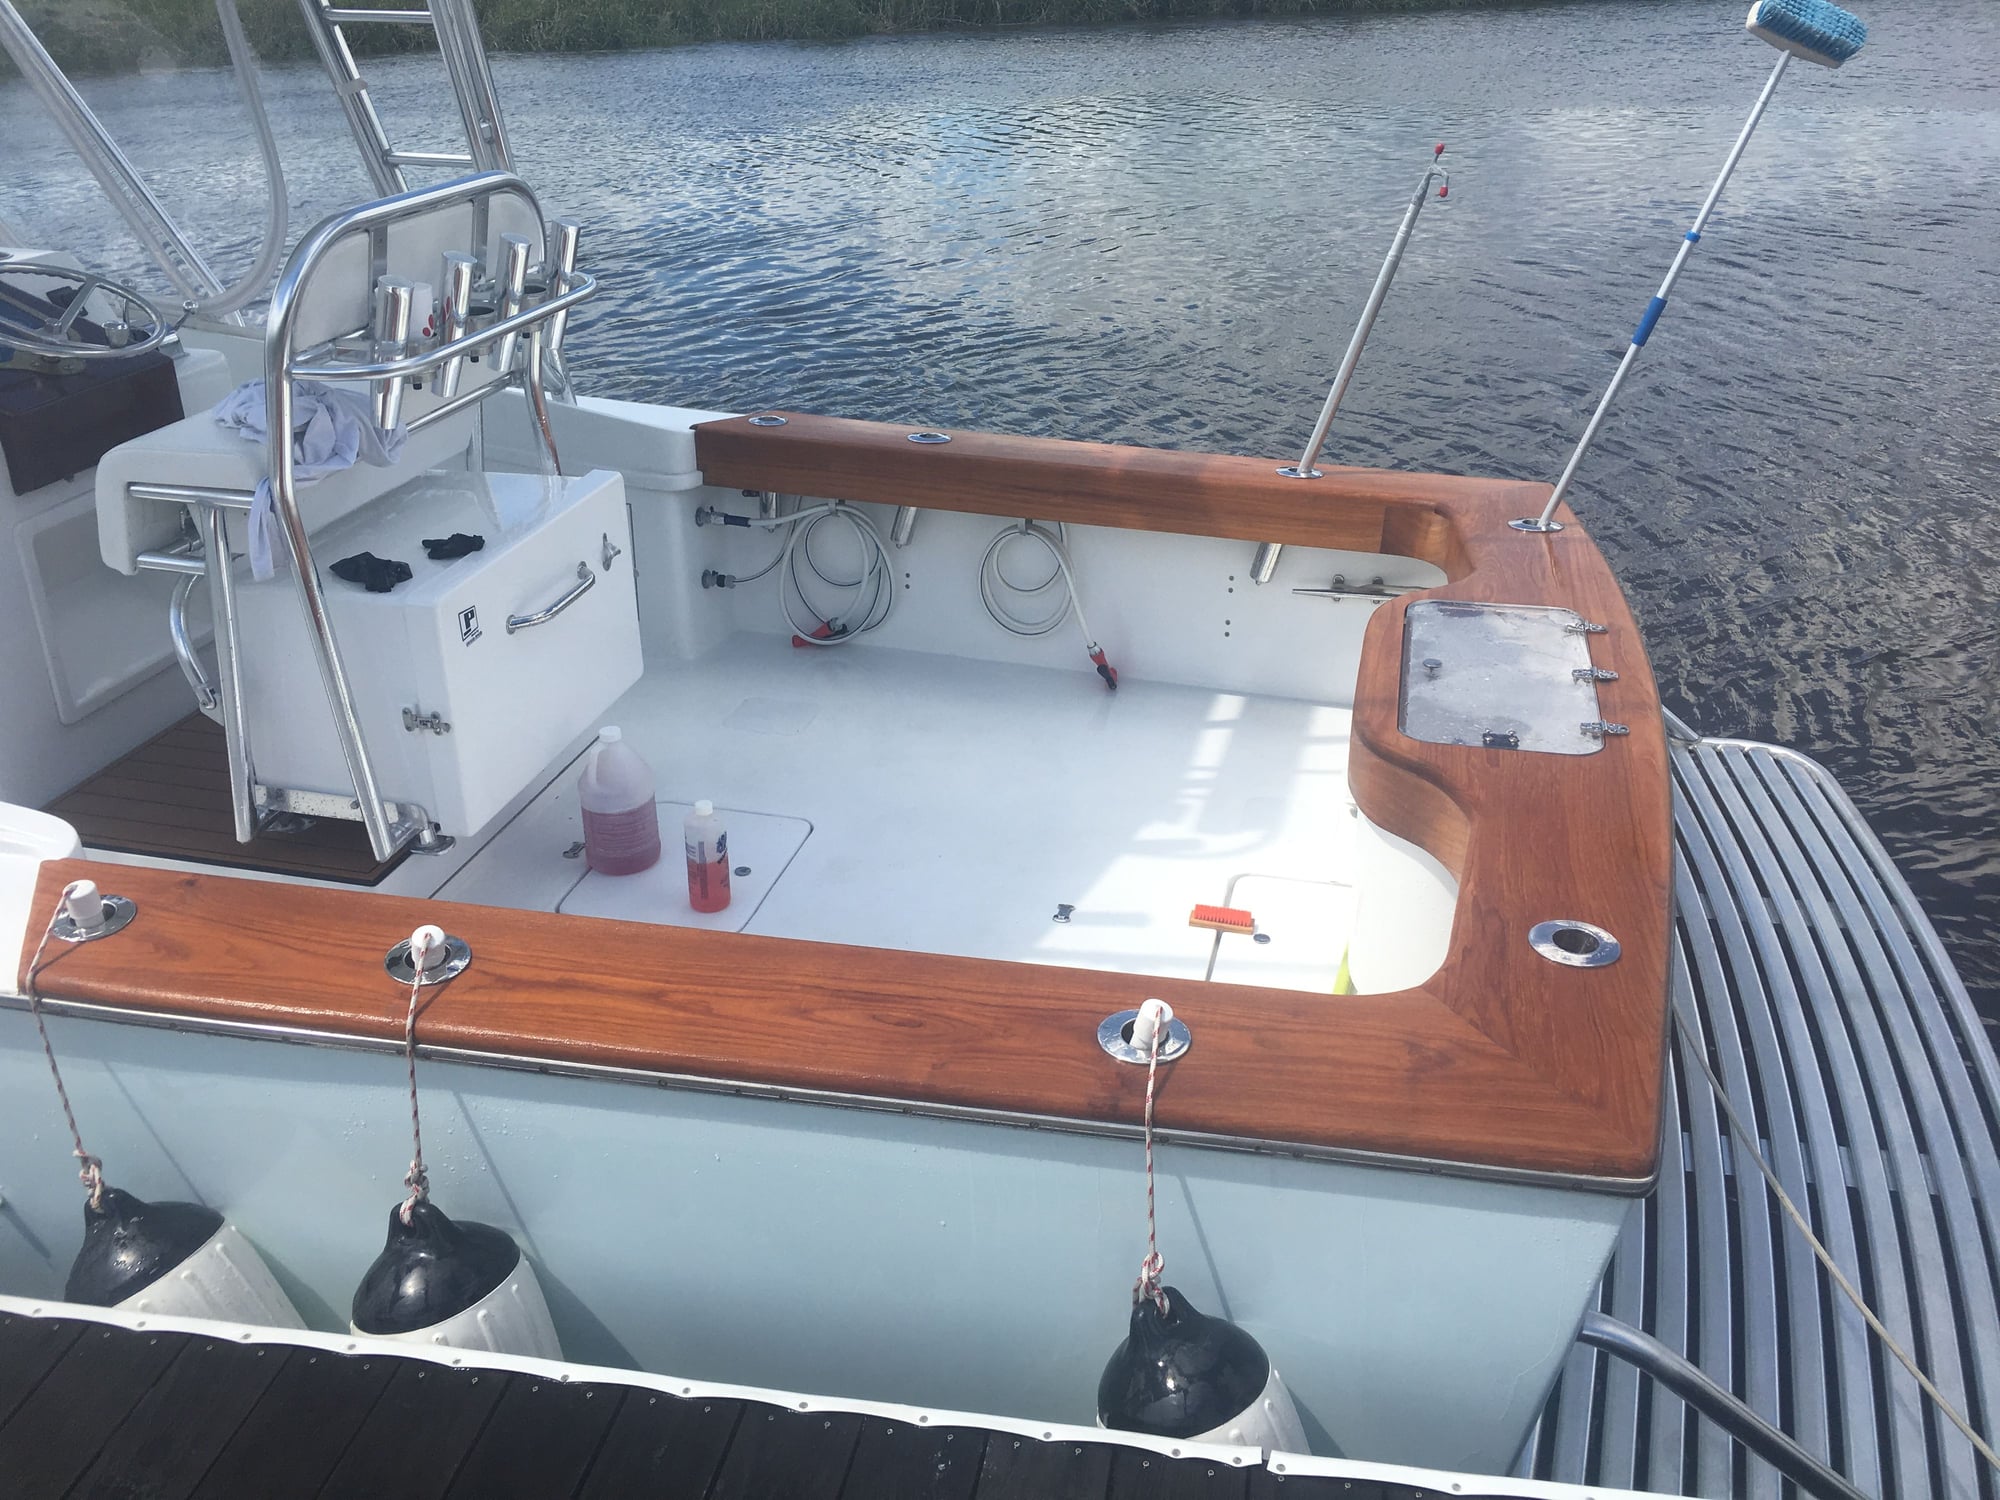 Brand new yeti 75 tundra NJ - The Hull Truth - Boating and Fishing Forum